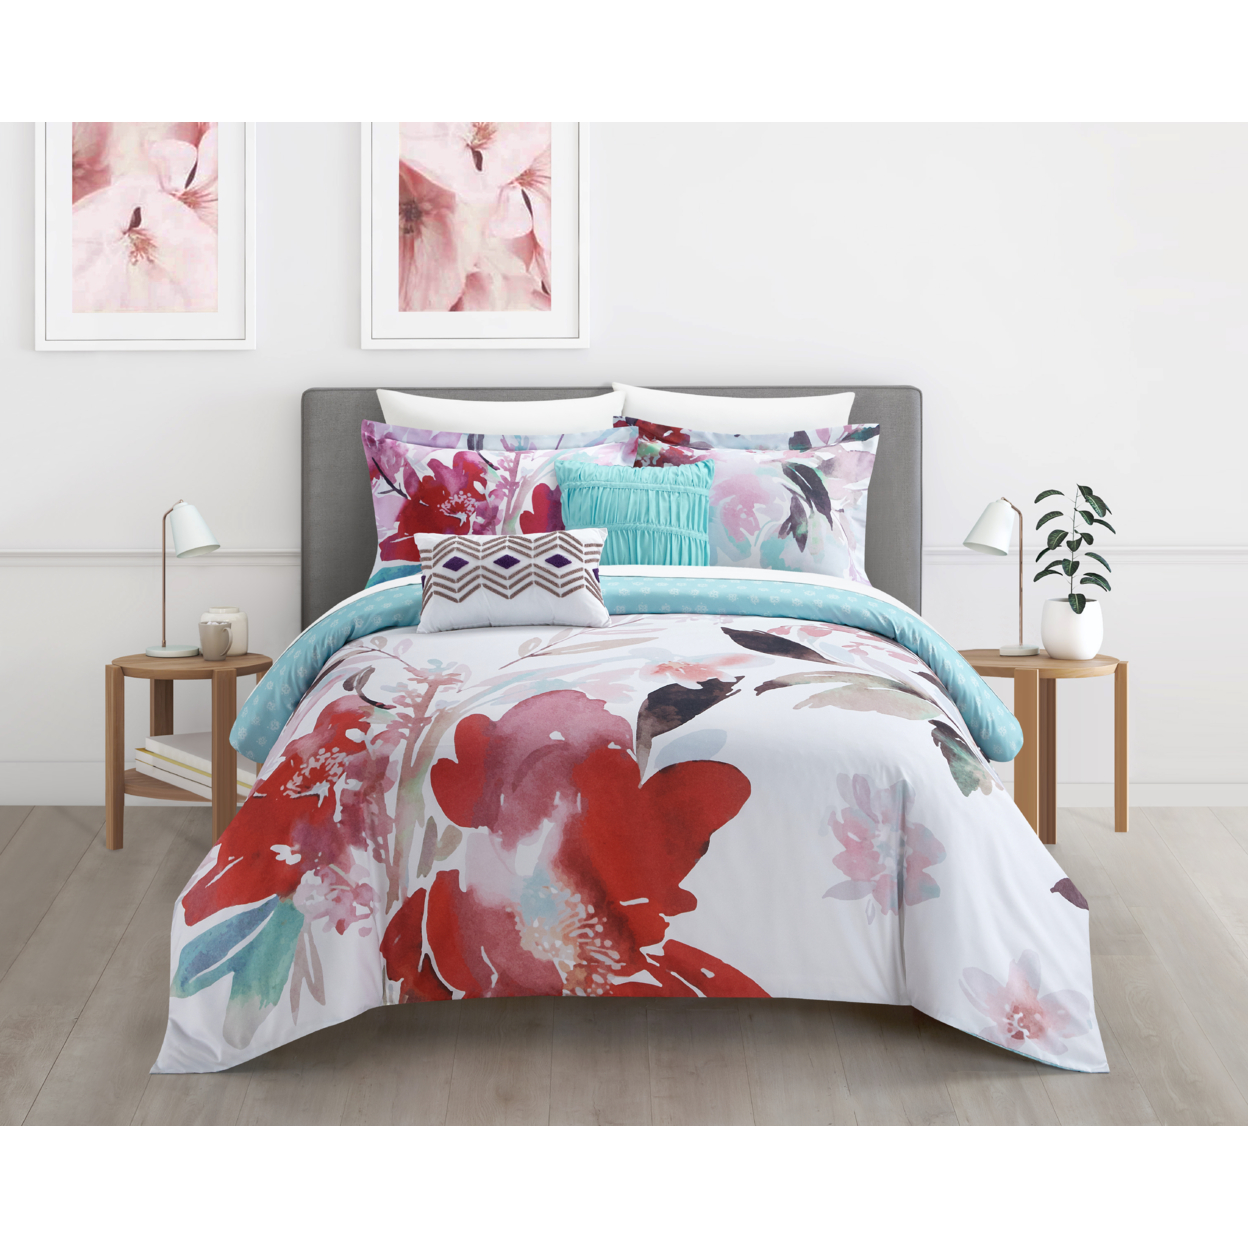 Victoria 5 Piece Reversible Comforter Set Floral Watercolor Design Bedding - Waldo Red, Queen